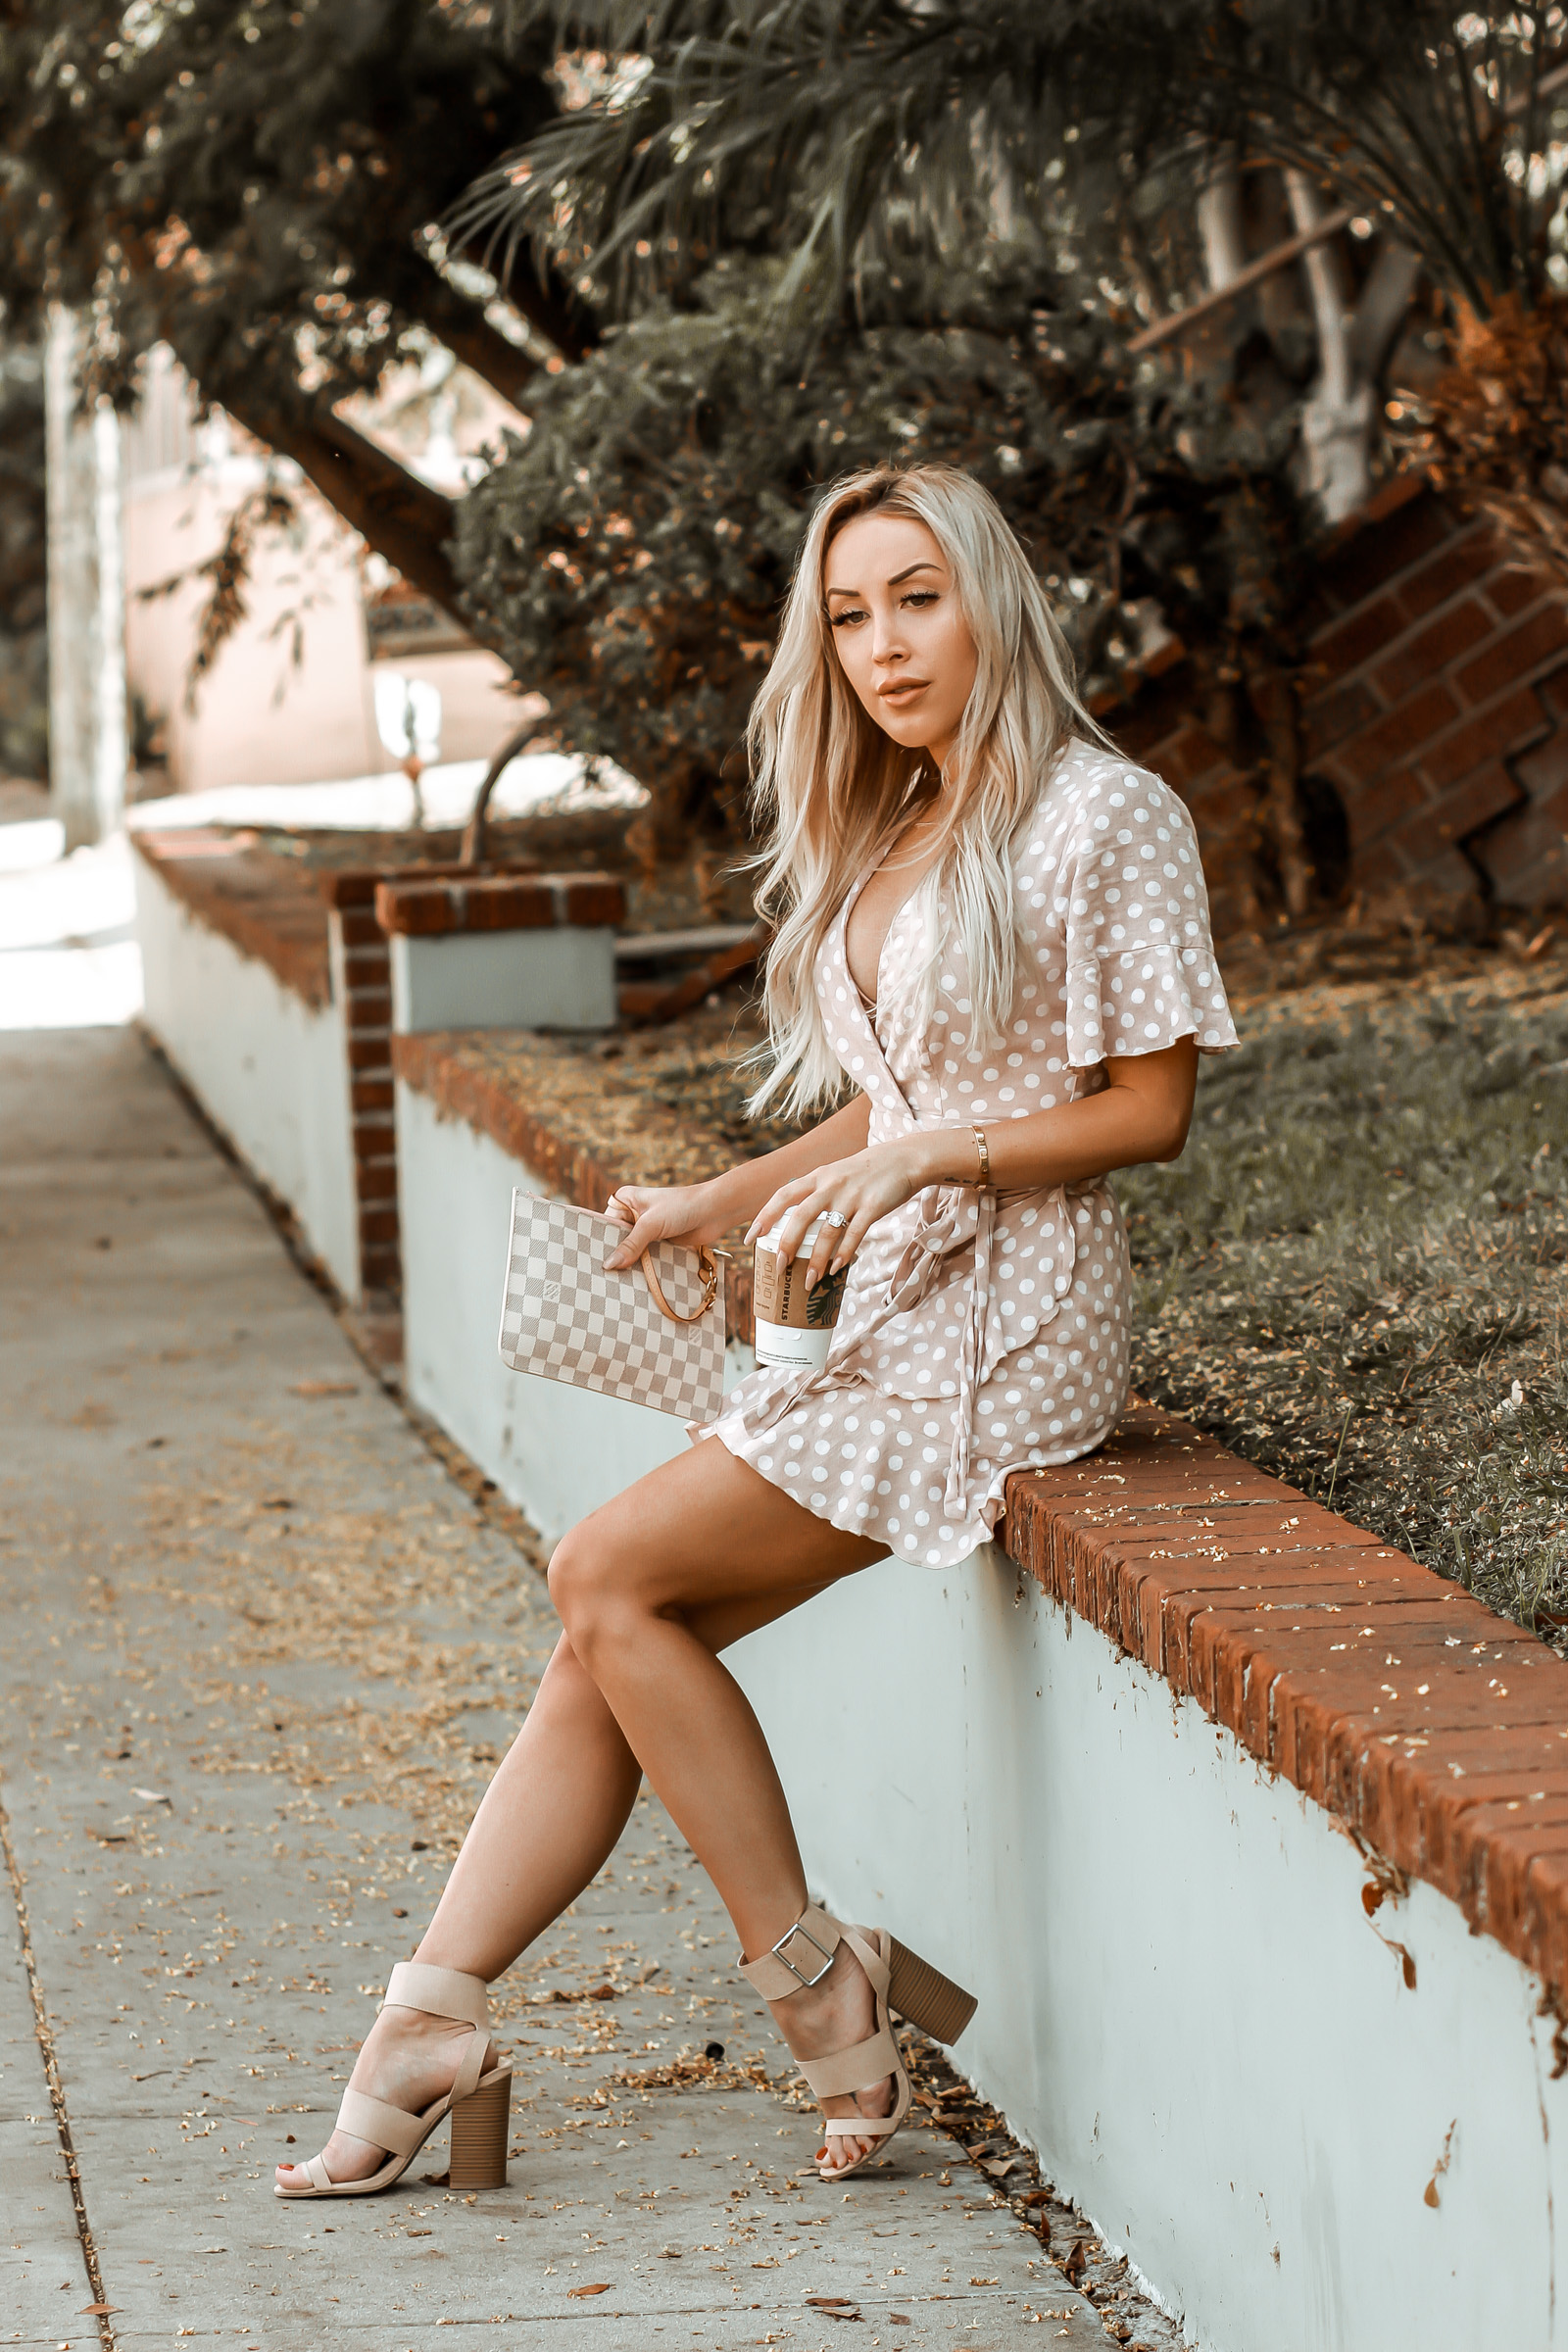 Pink Pastel Dress Polka Dots | Revolve | Pastel | Fashion Blogger | Blondie in the City by Hayley Larue